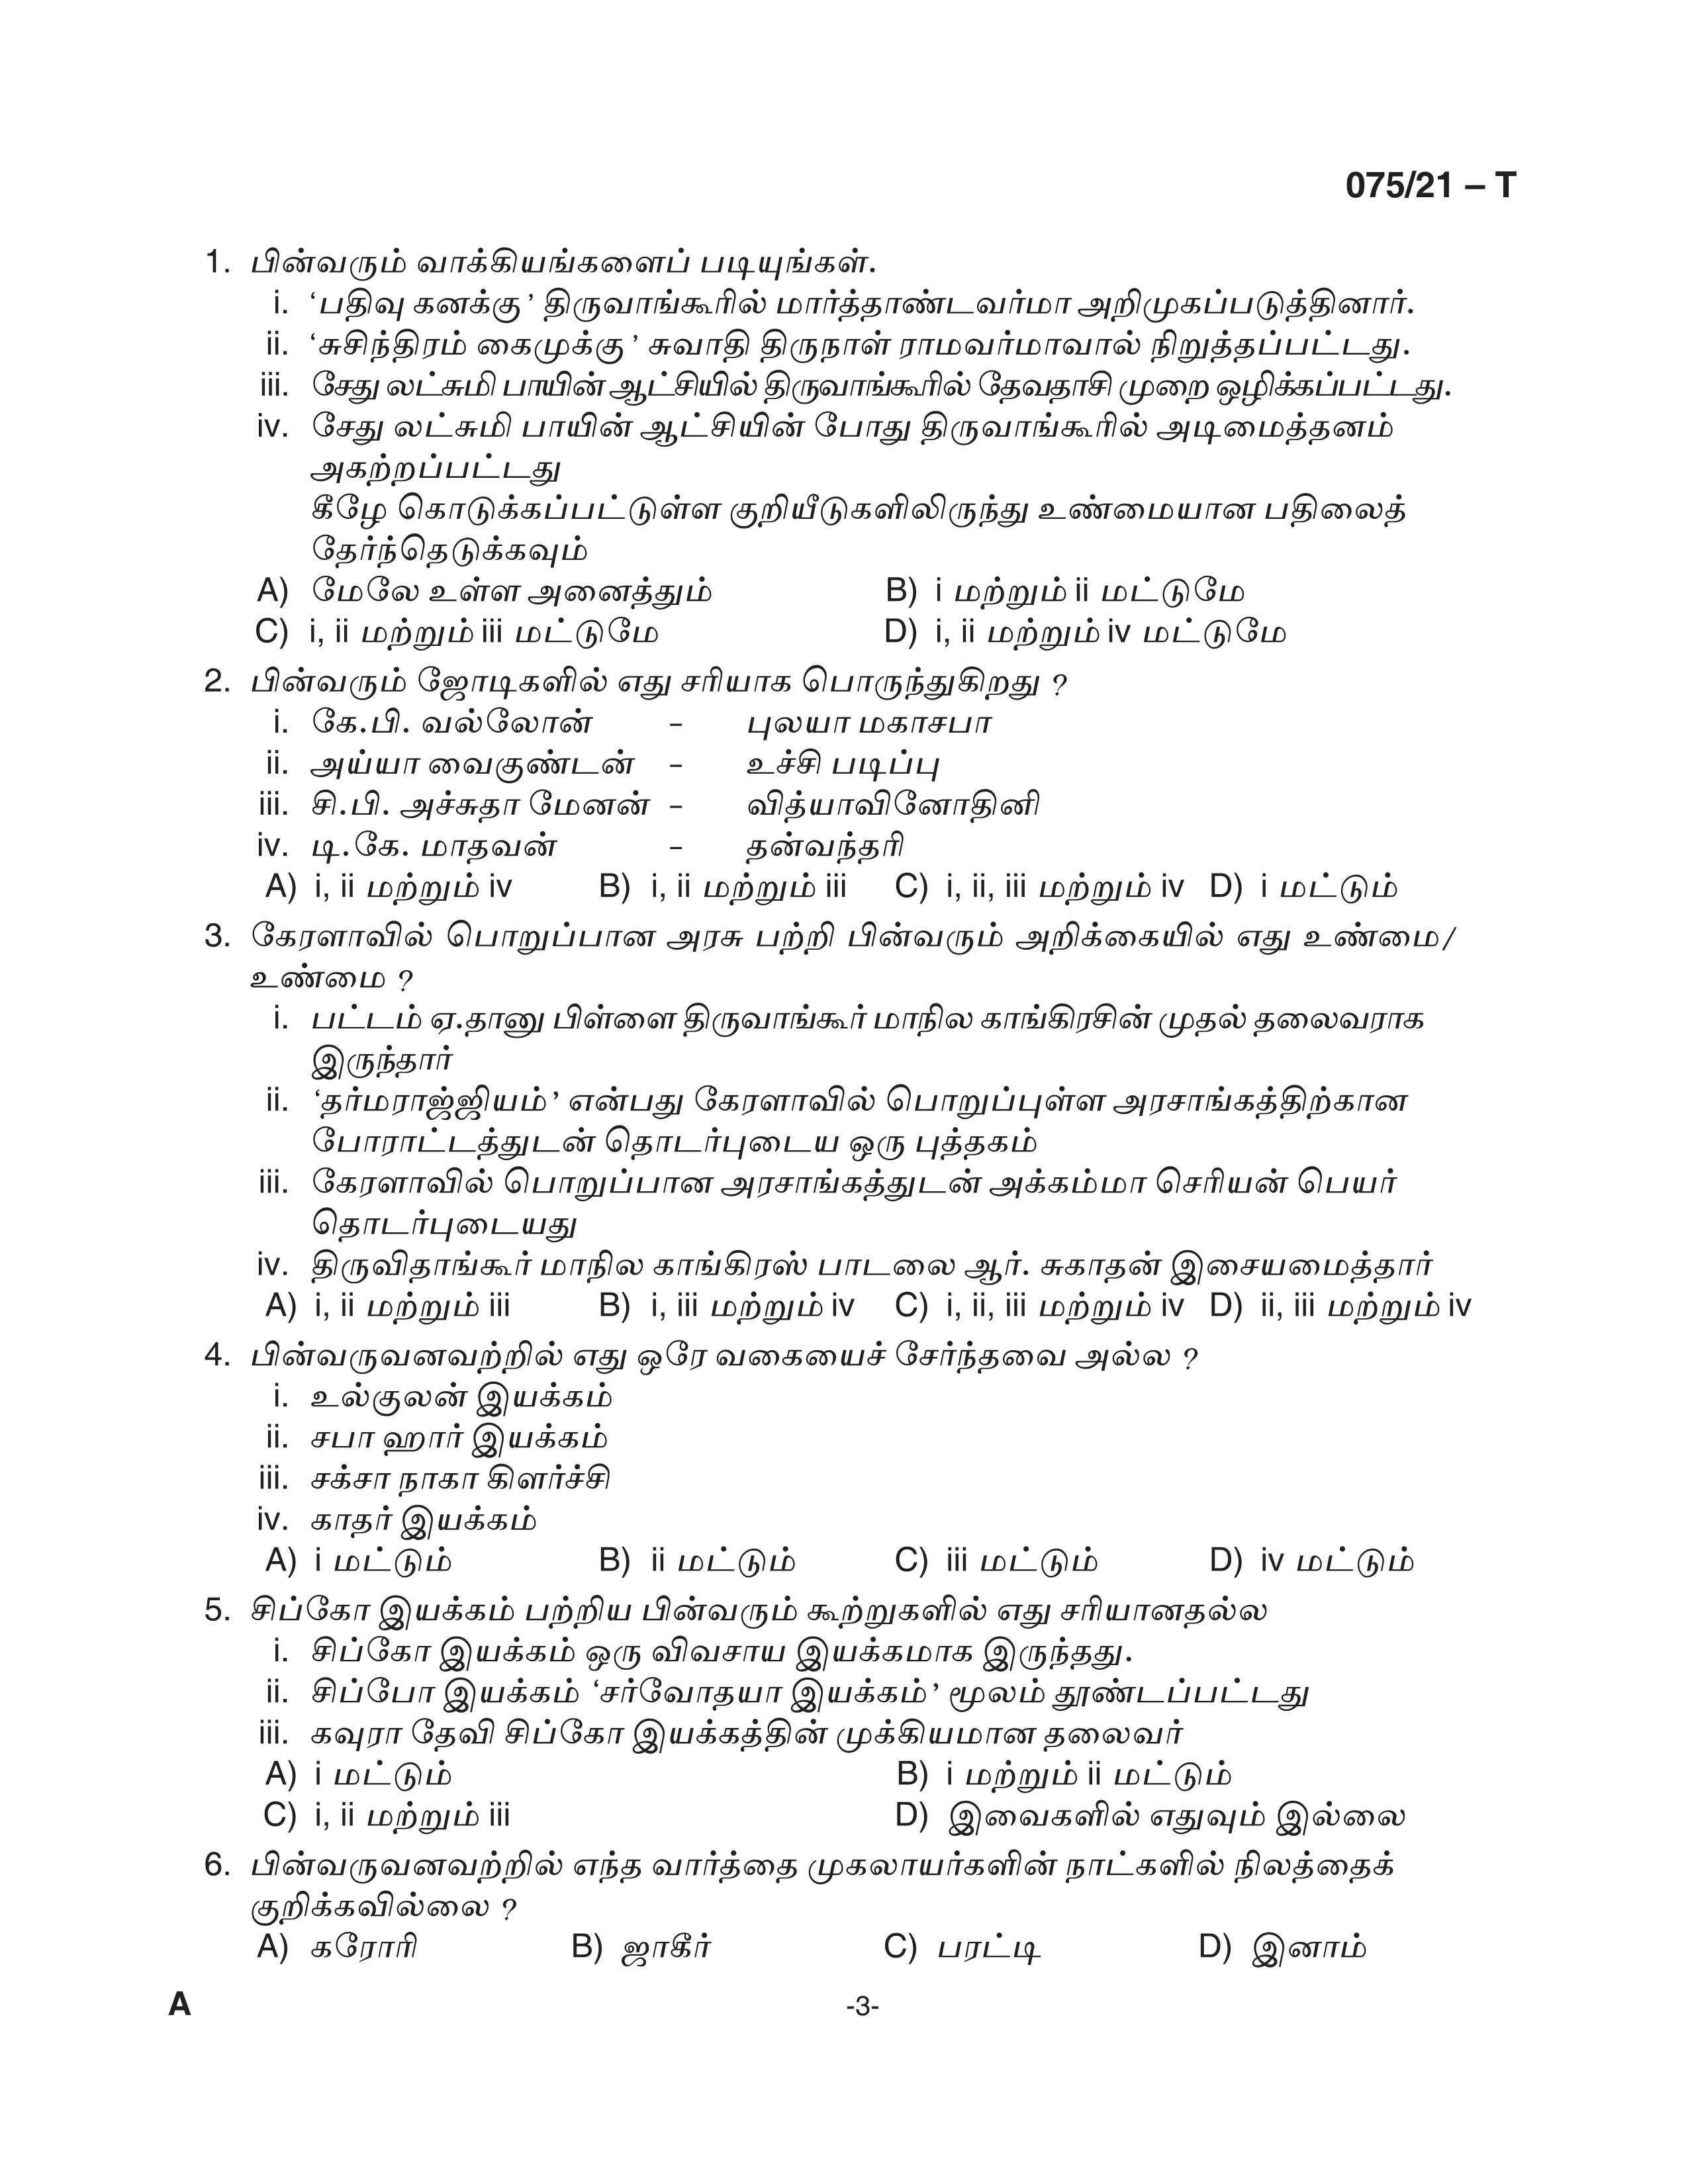 KPSC Degree Level Preliminary Exam Stage I Tamil 2021 Code 07521 T 3